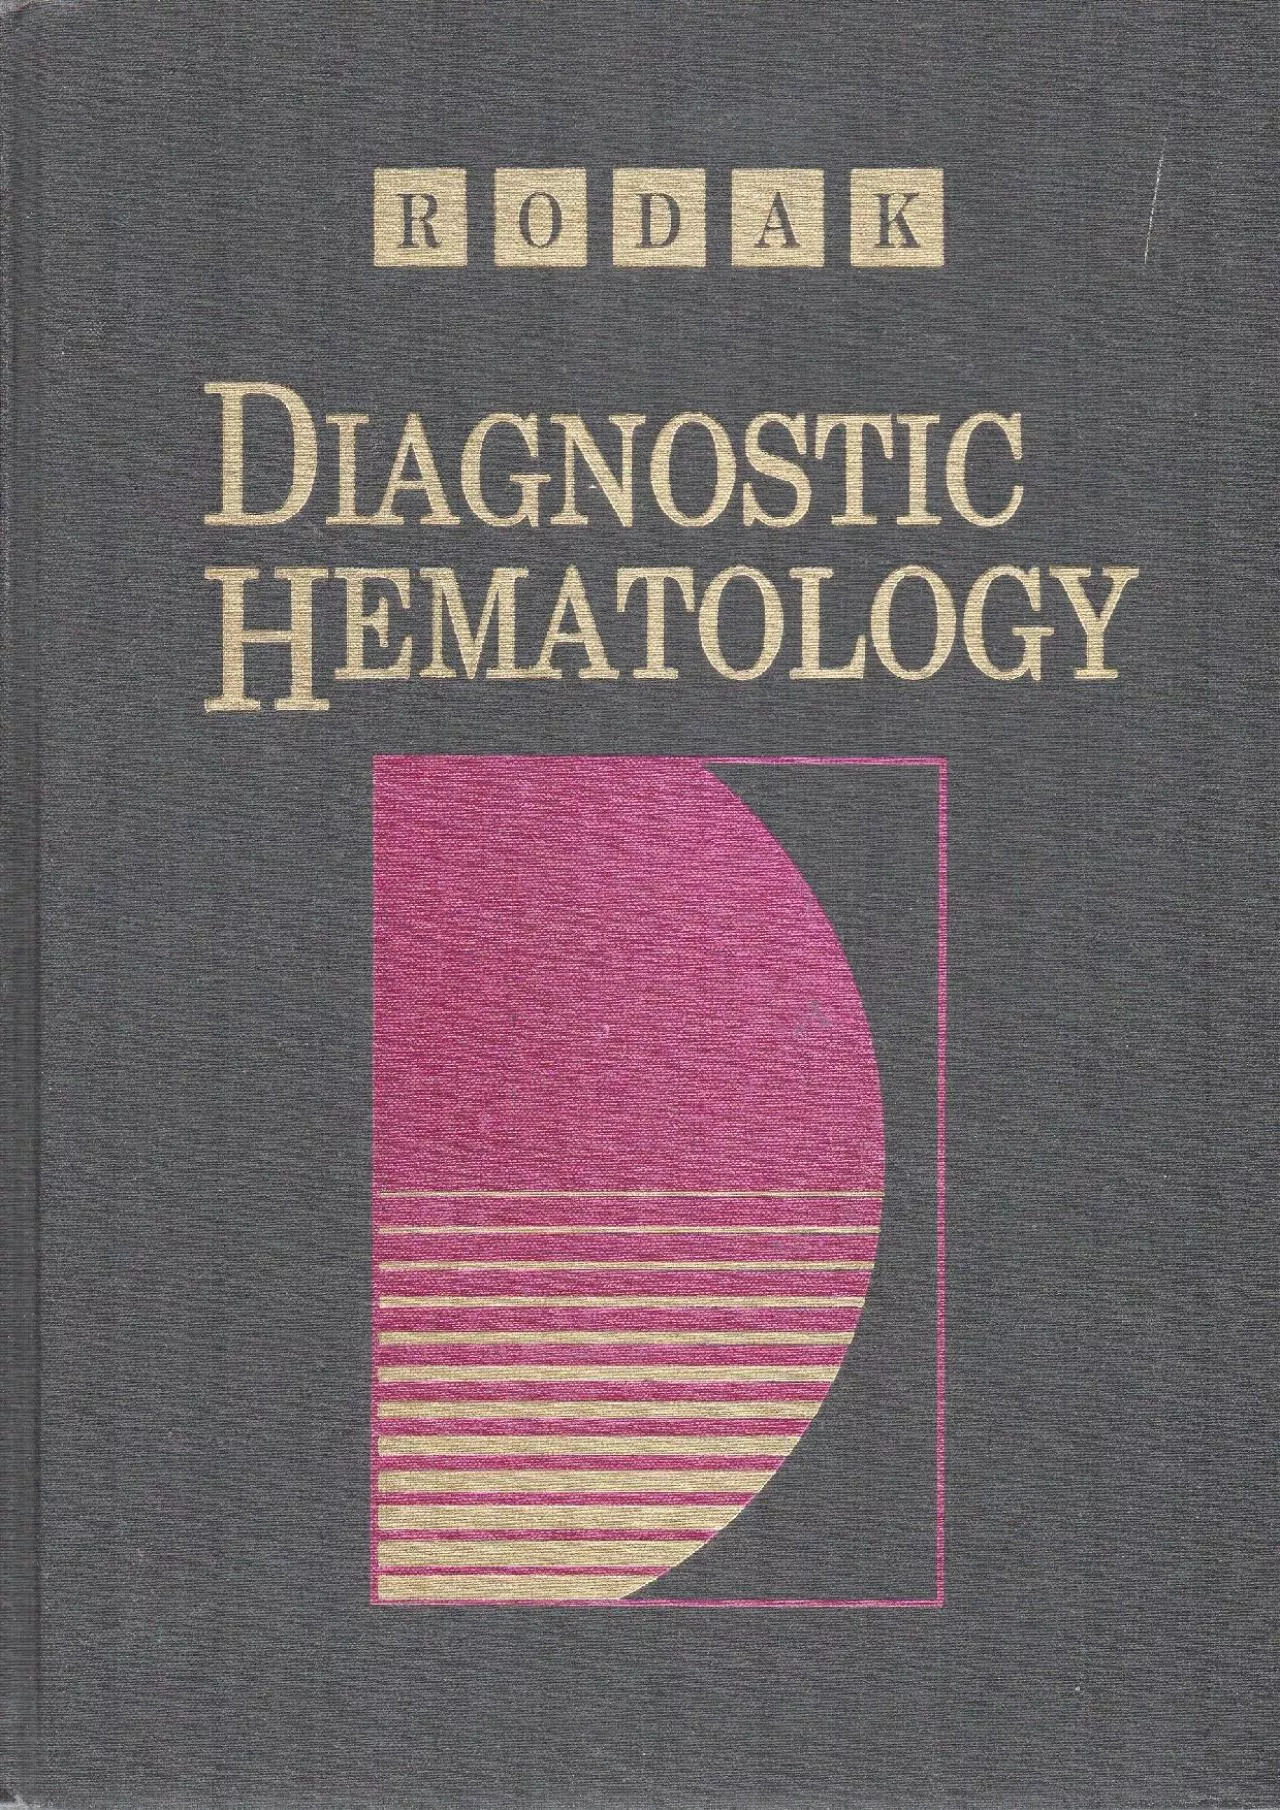 (BOOS)-Diagnostic Hematology